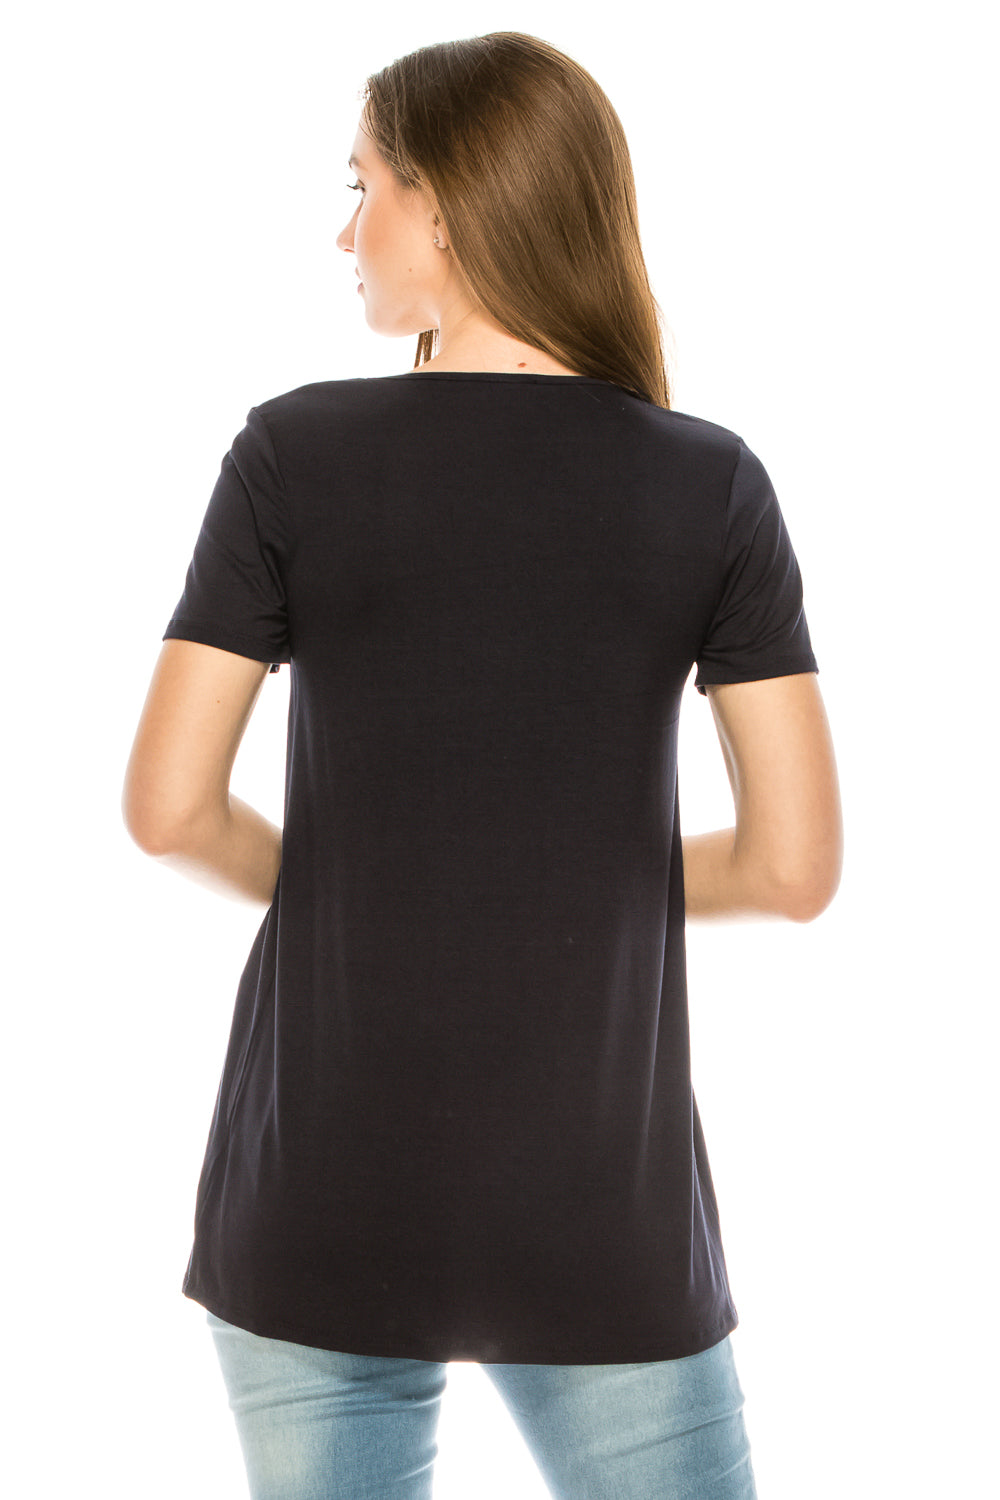 Made in USA Women's Round Neck Short Sleeve TOP - annva-usa